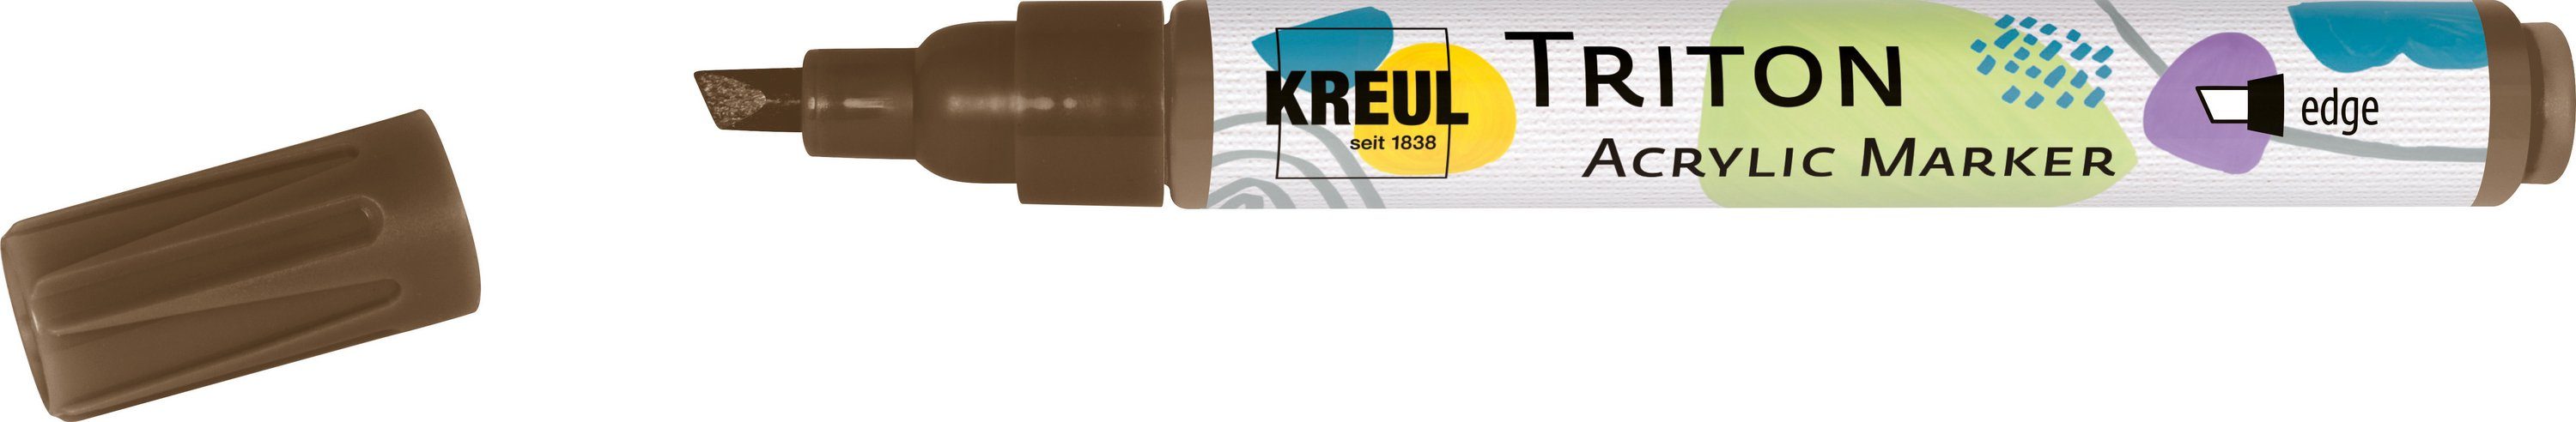 mm Kreul 4 EDGE, Acrylic Marker 1 Triton Havannabraun - Strichstärke Marker